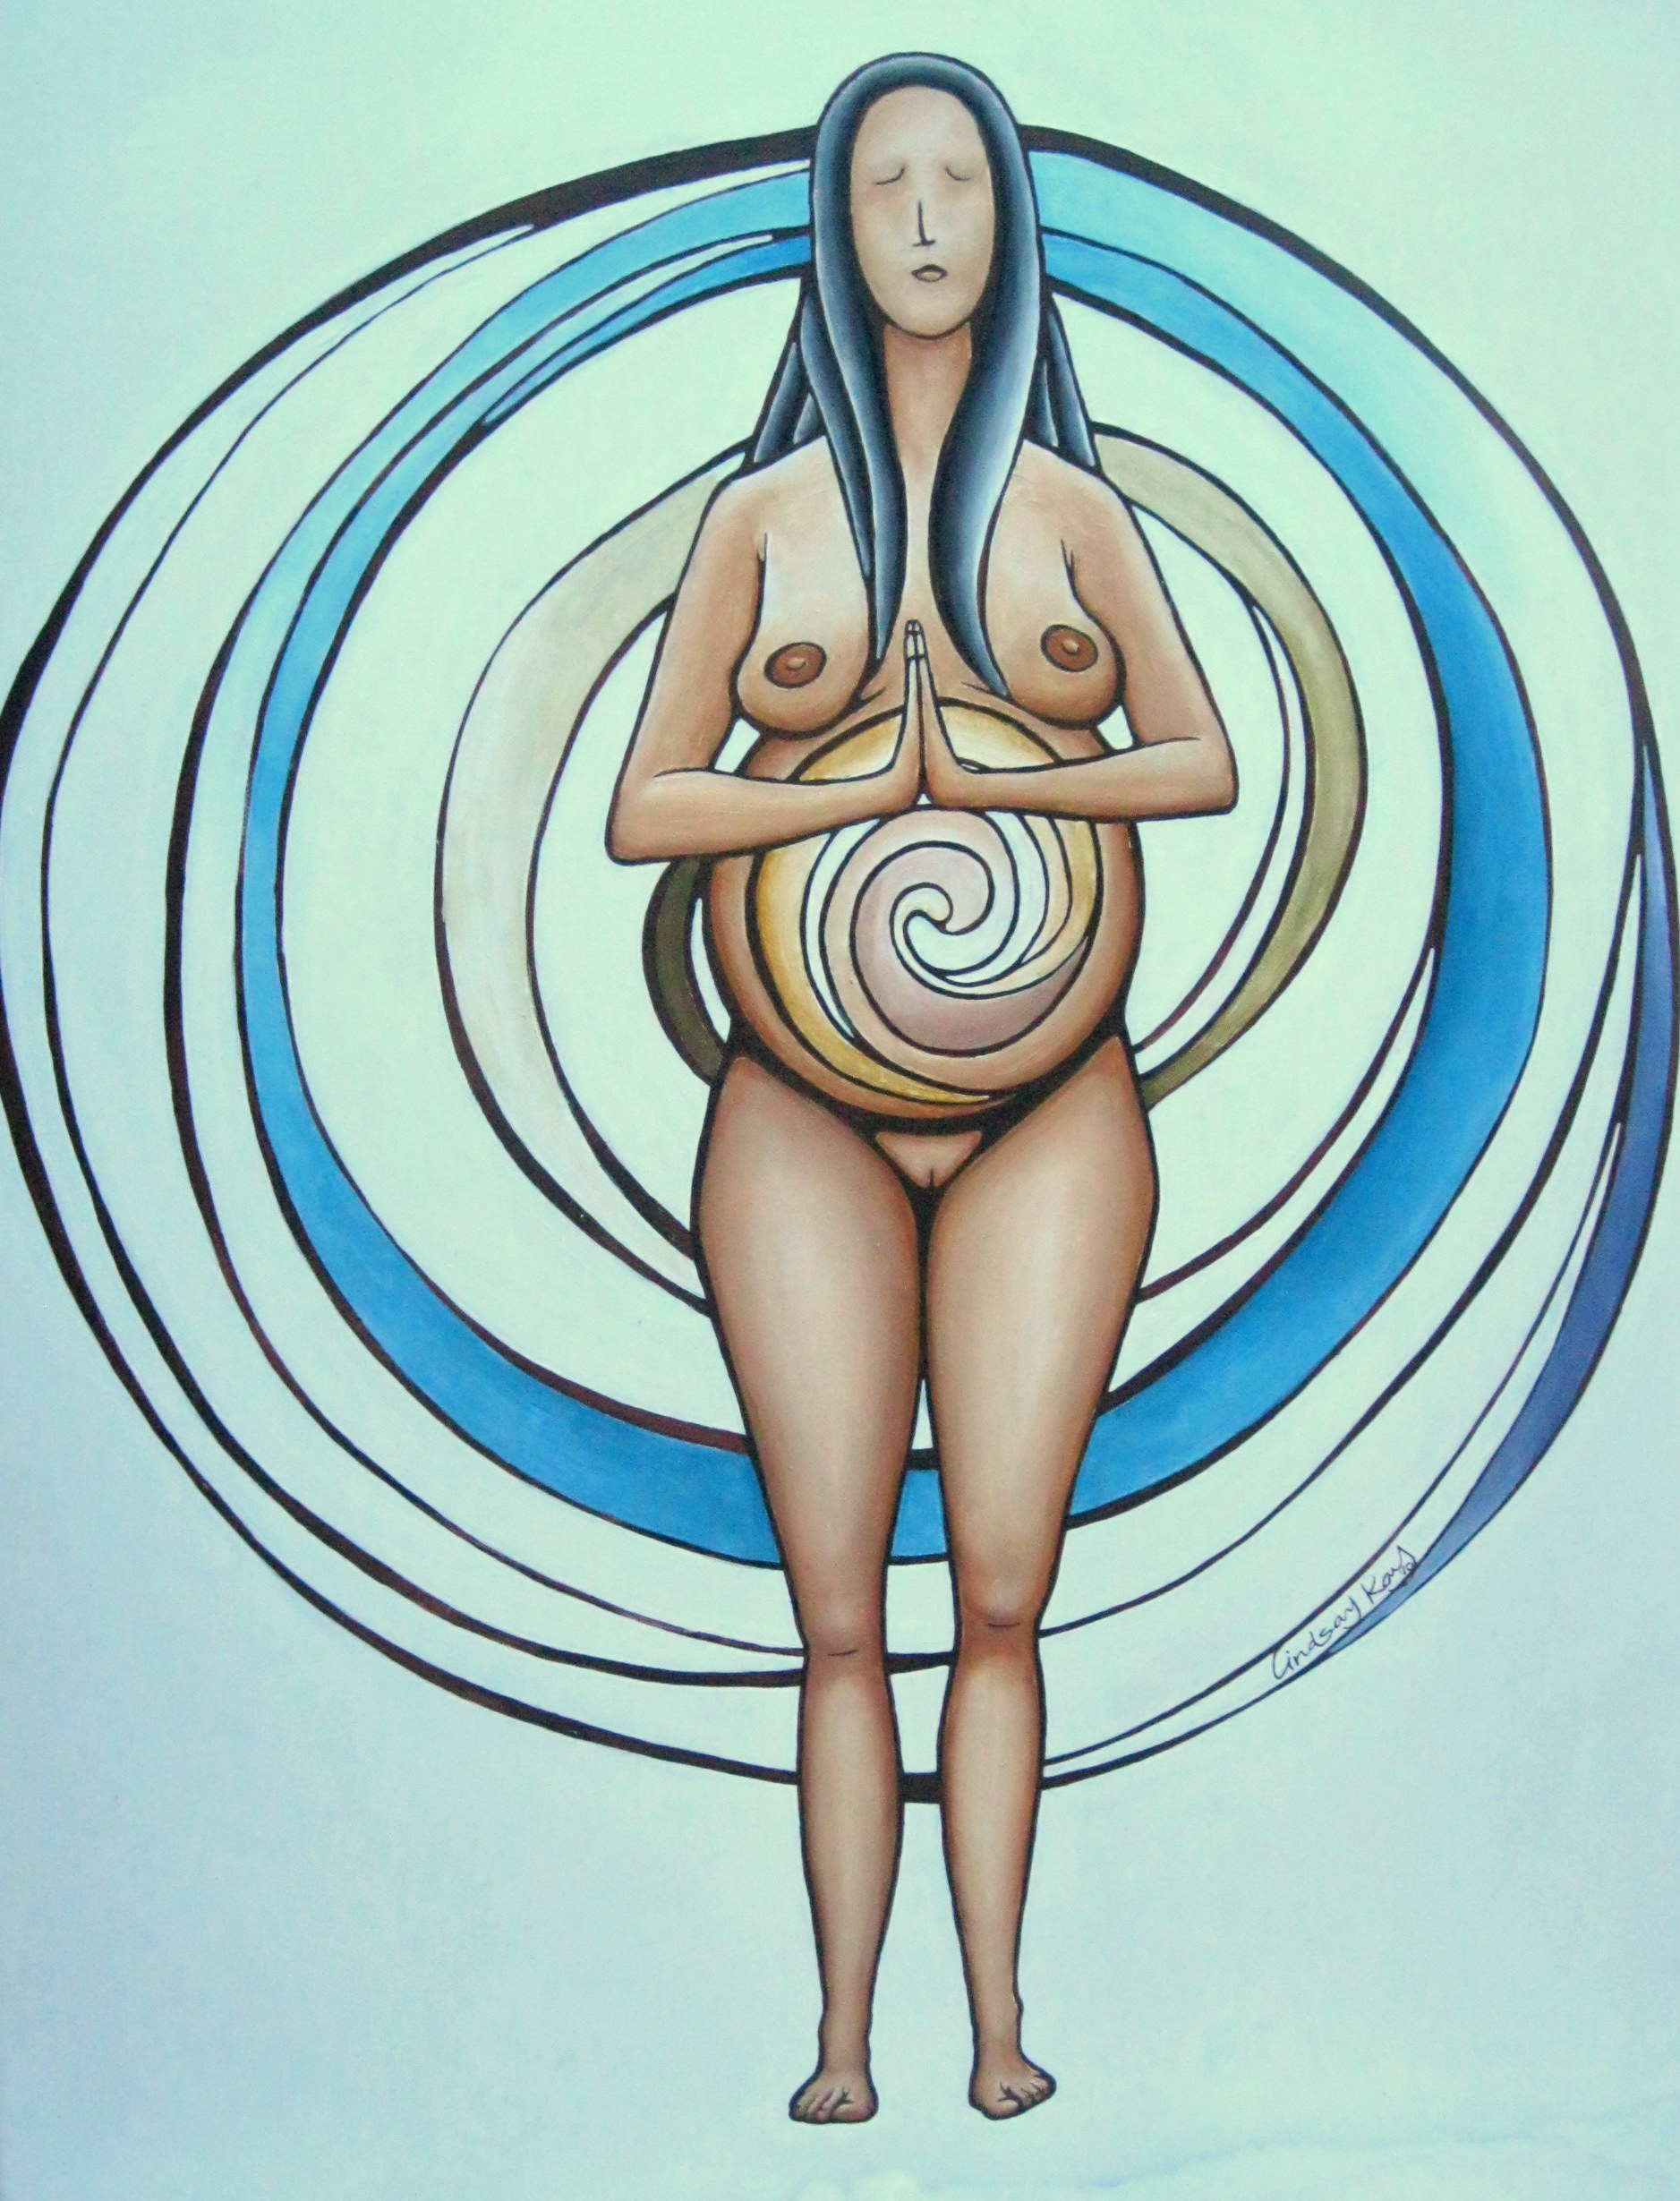 Pregnancy art, birth art, spiral art, feminine power art